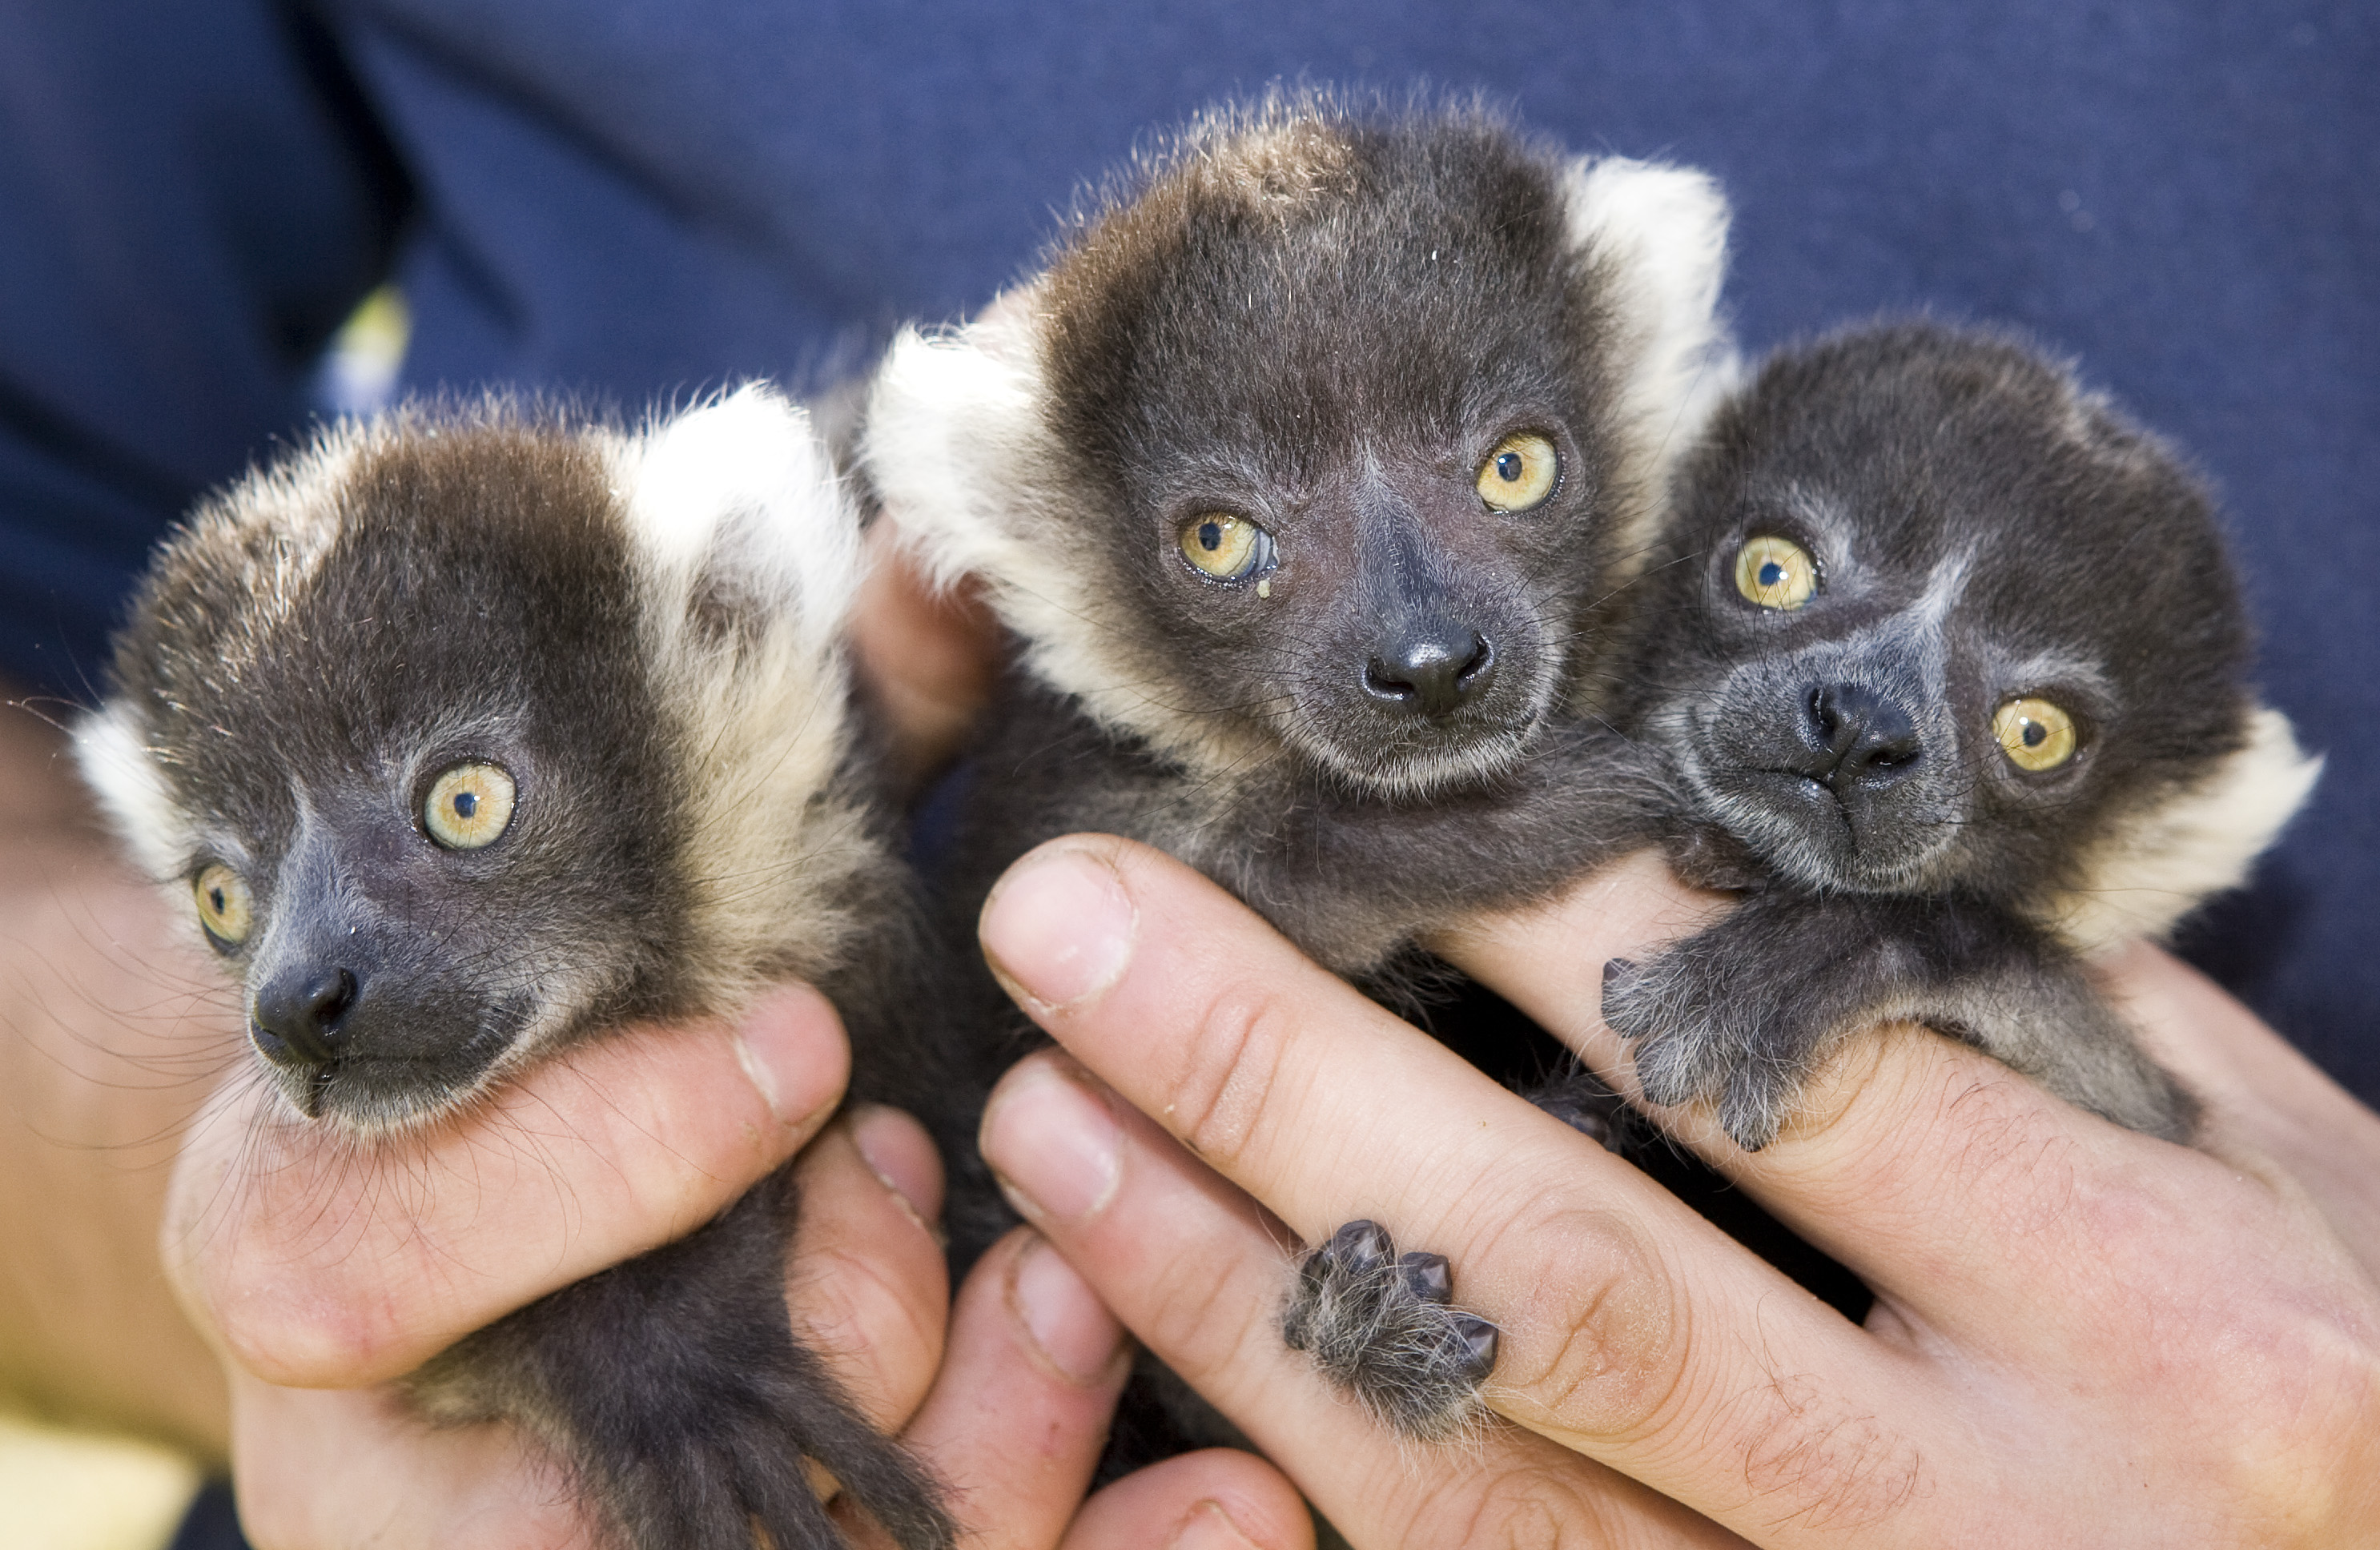 Lemur triplets